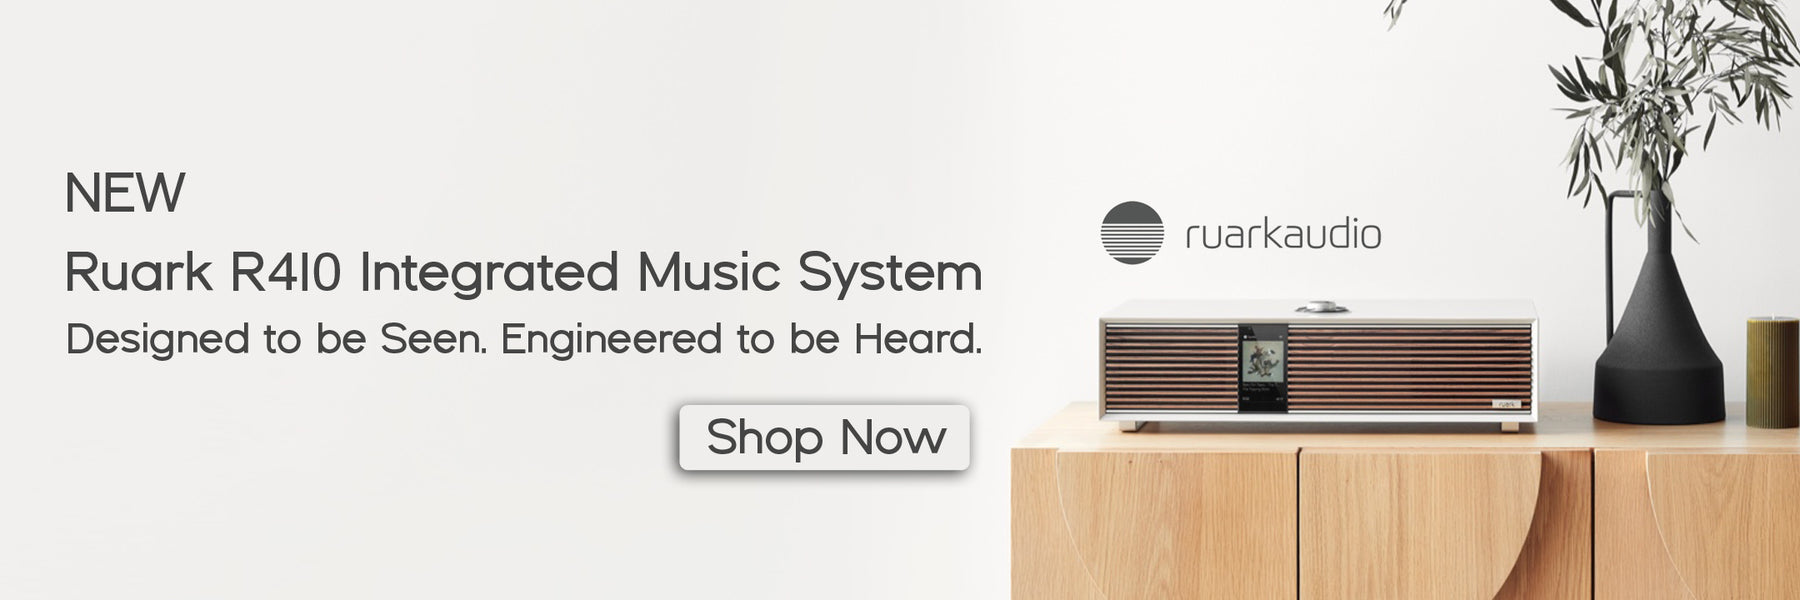 Ruark r410 integrated music system